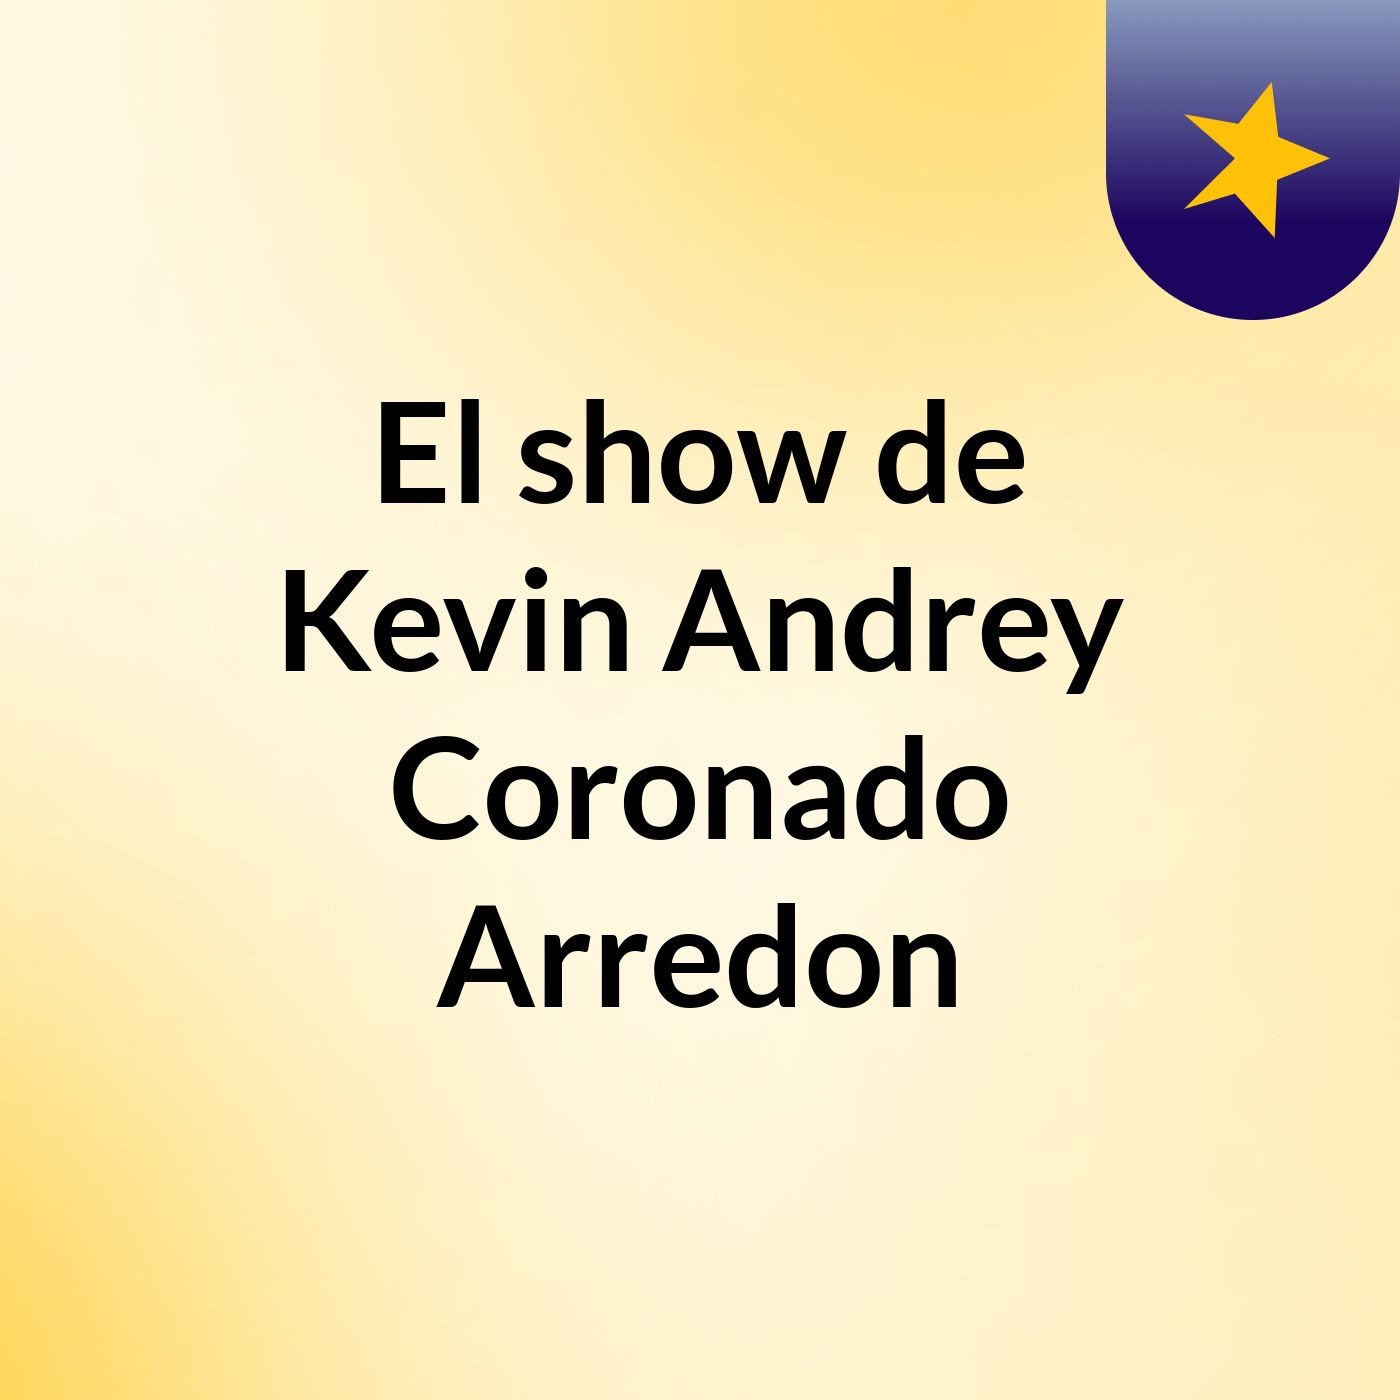 El show de Kevin Andrey Coronado Arredon